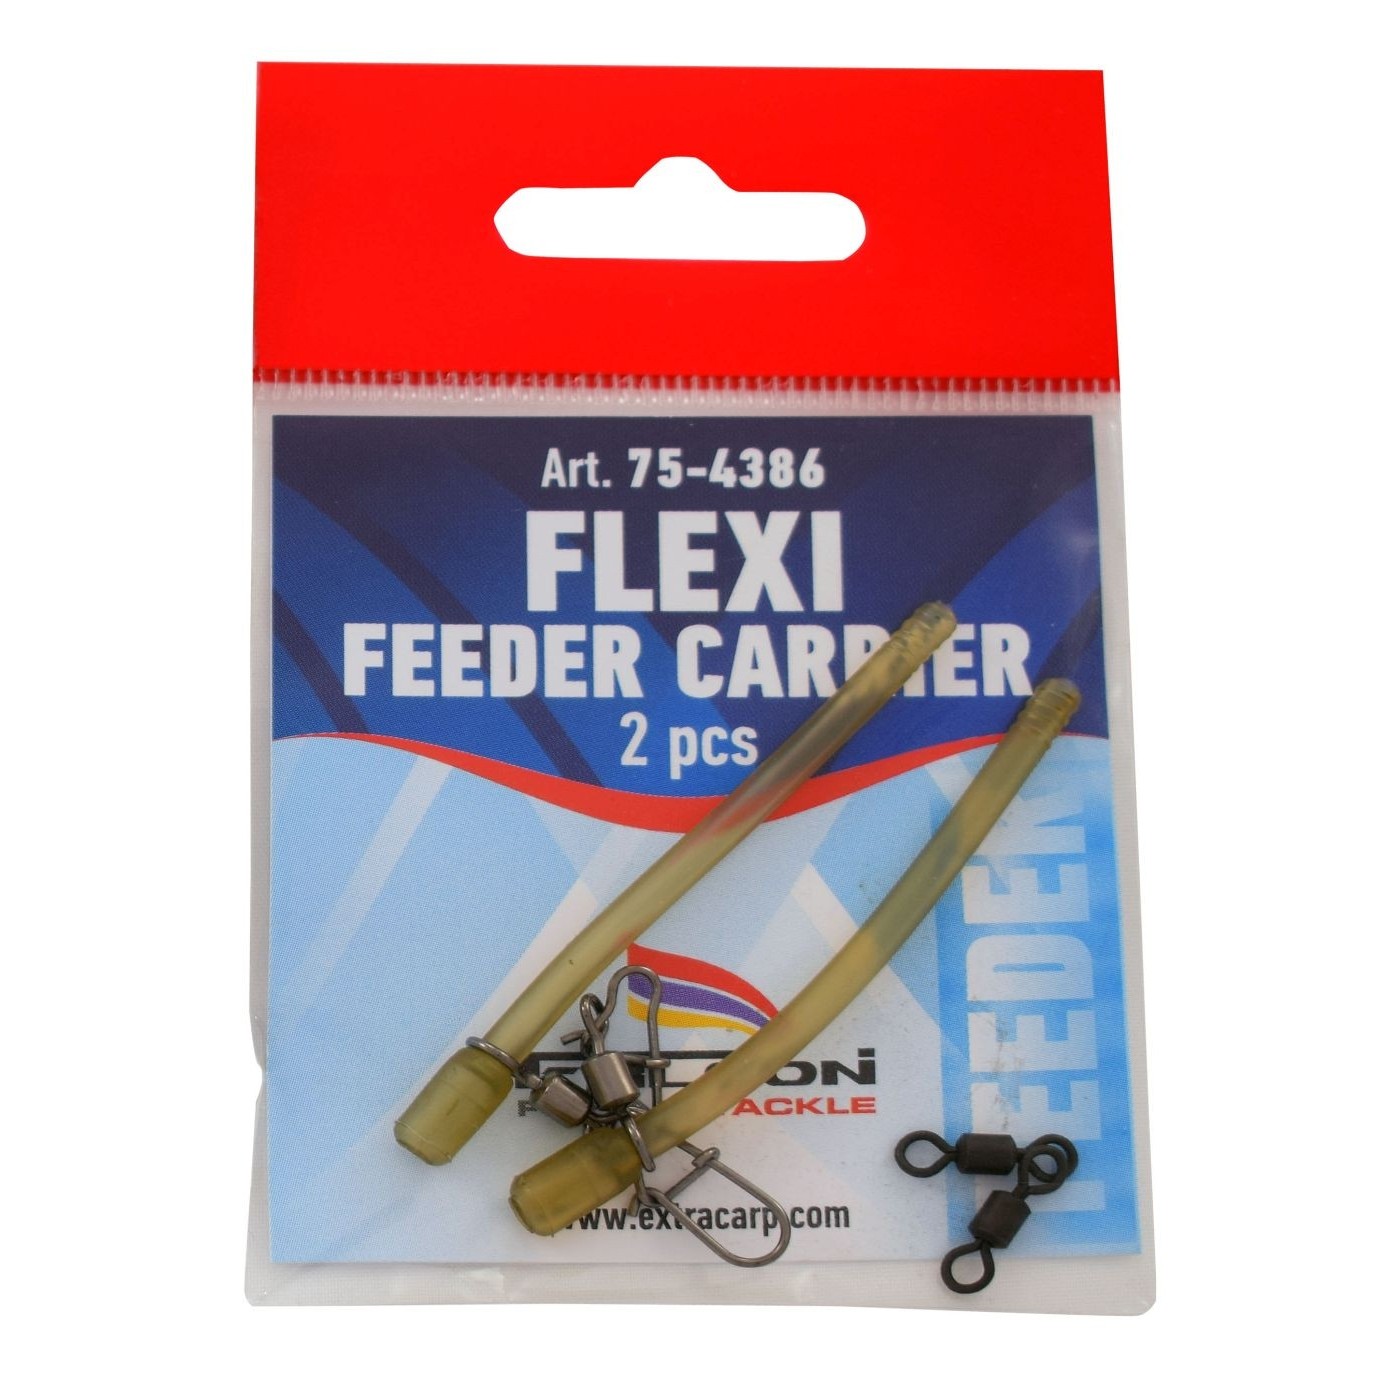 FALCON Flexi Feeder Carrier 2 buc / blister - F4386